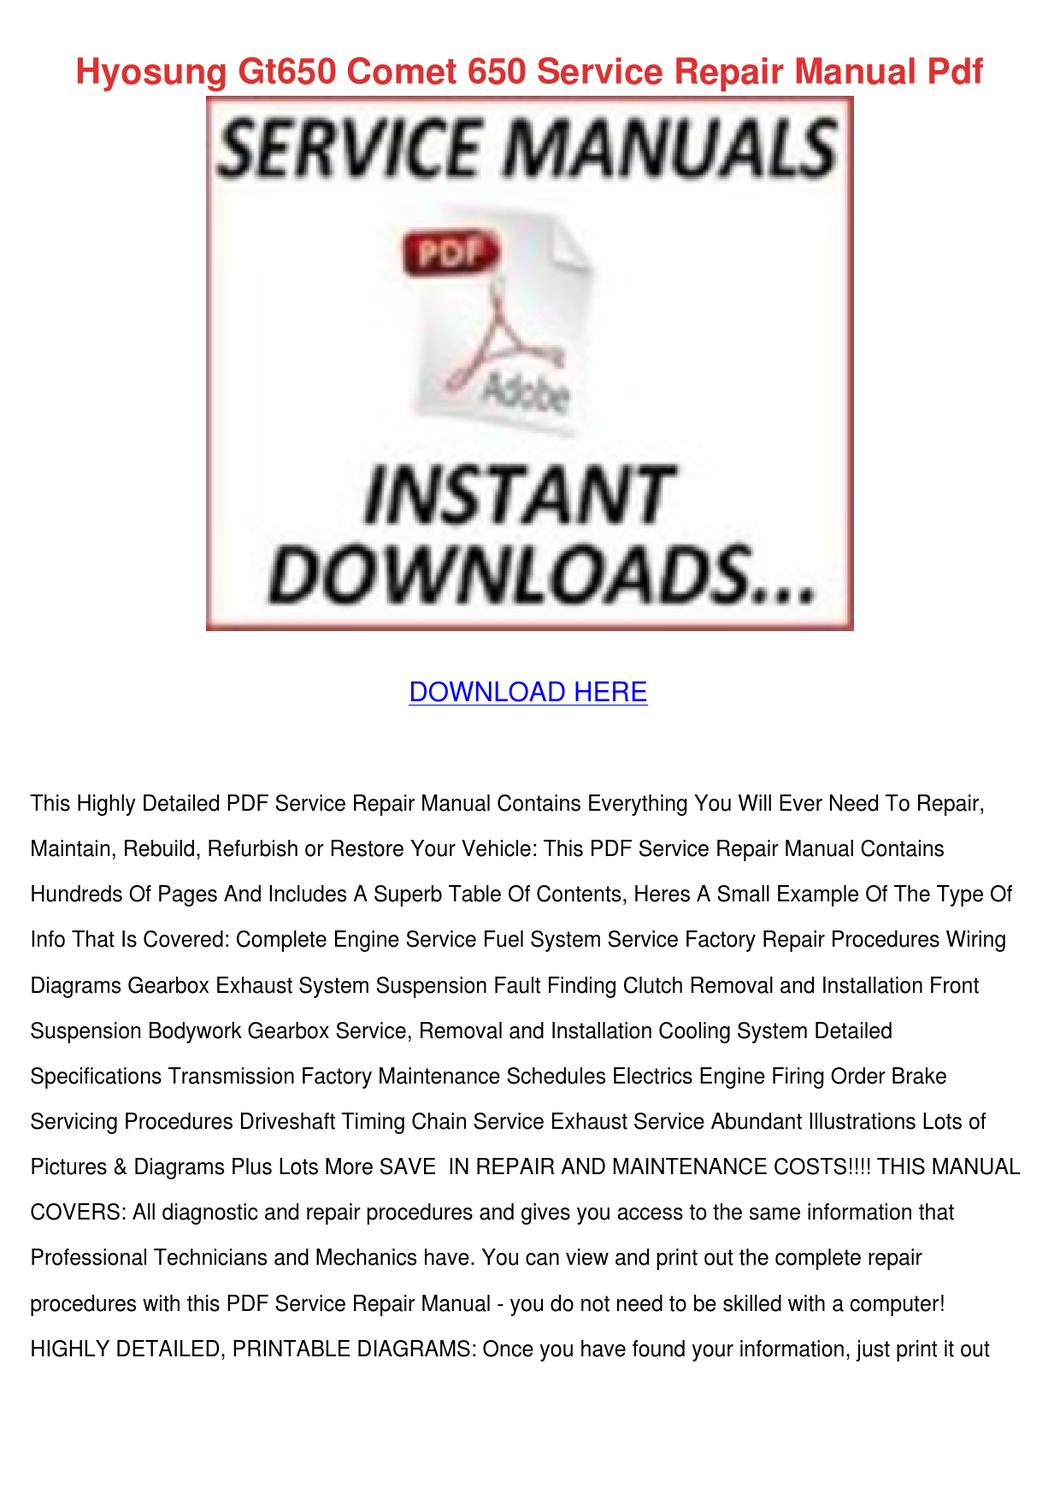 hyosung gt650 service manual download